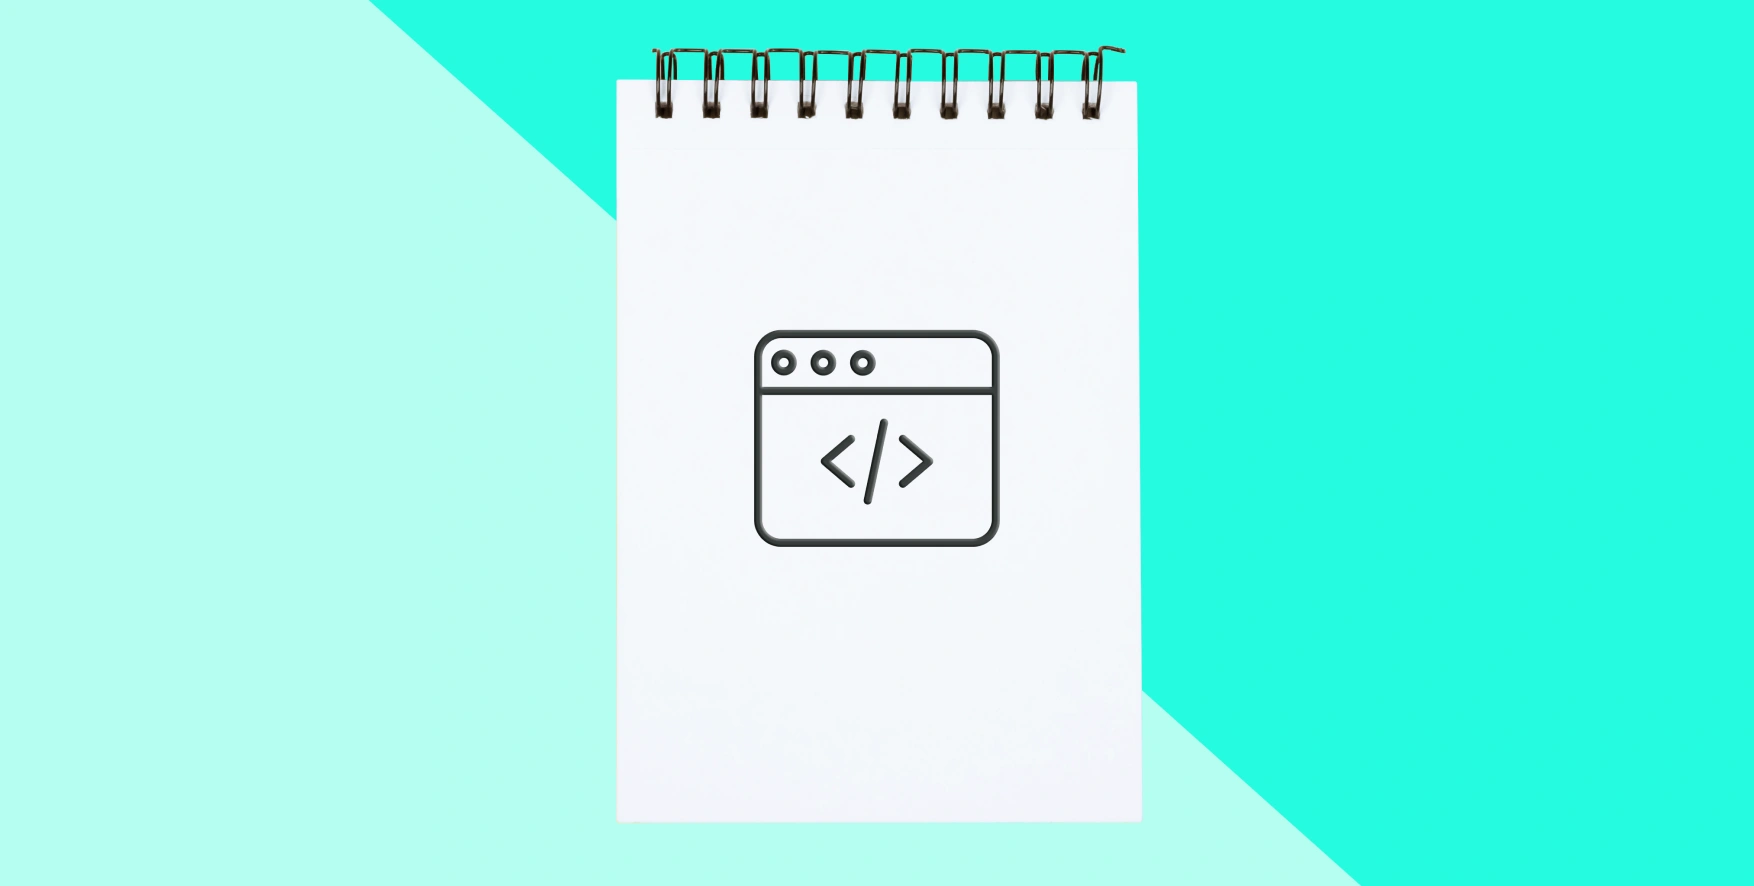 web development symbol on a piece of notepad